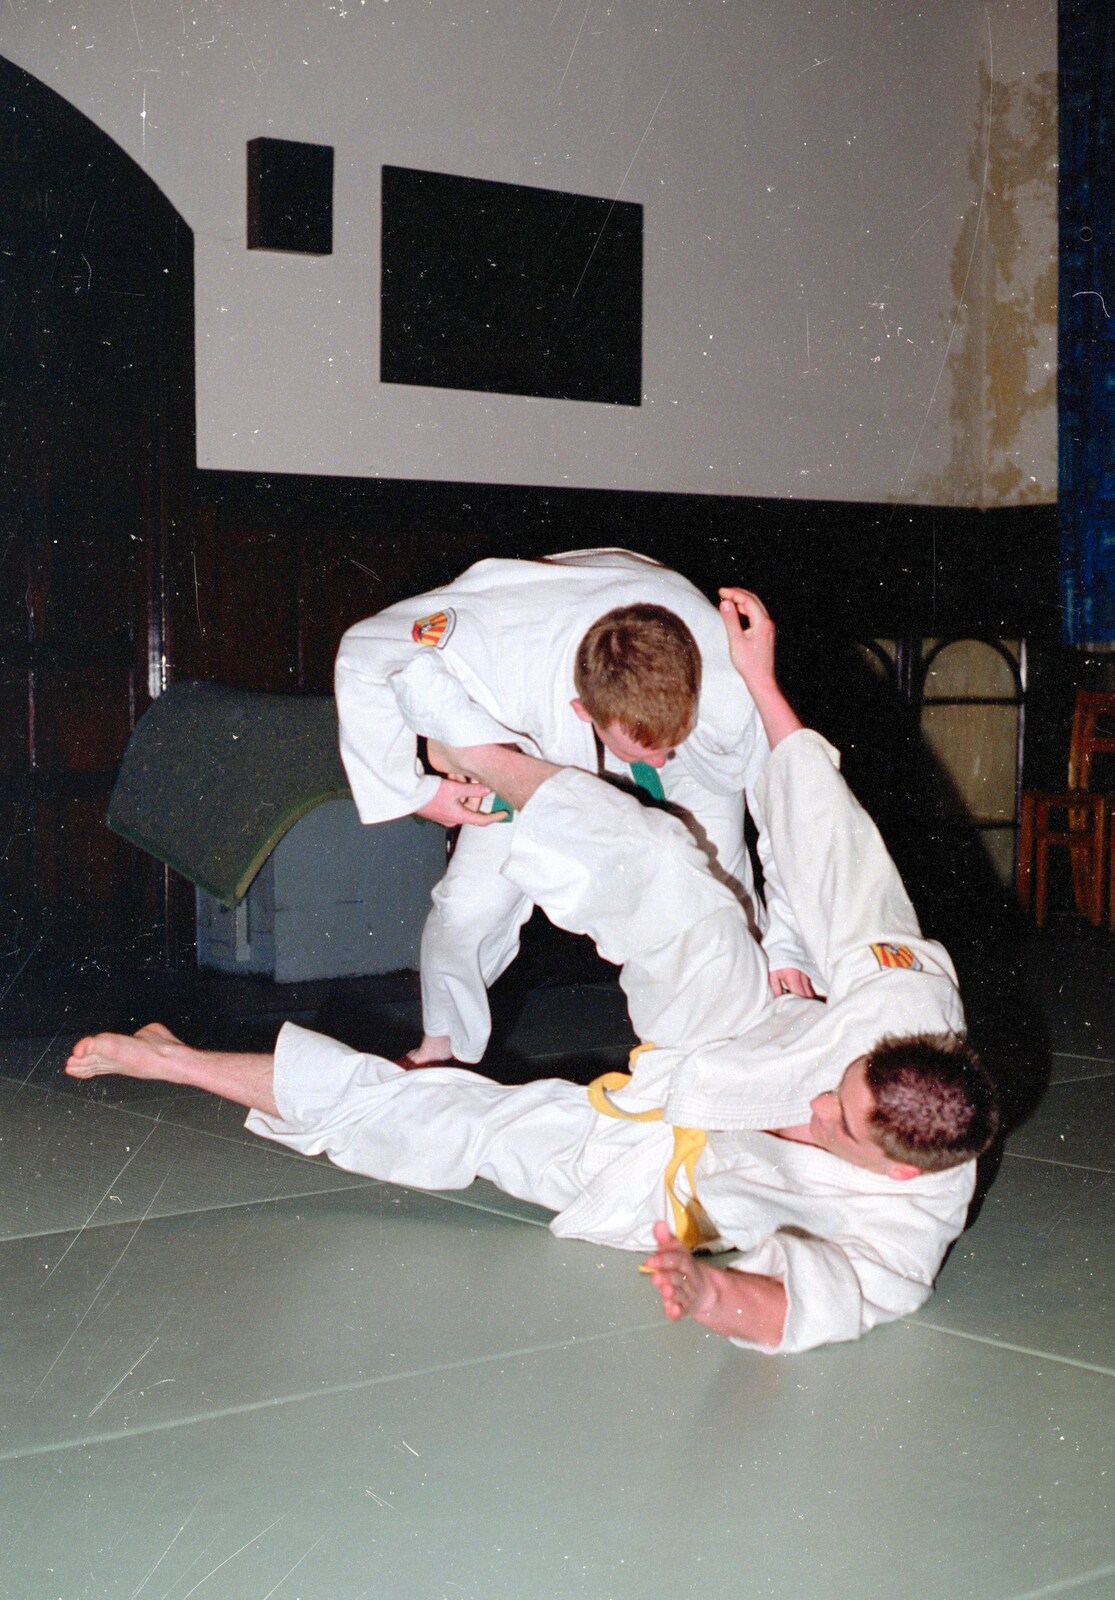 Uni: Dartmoor Night and Day, Dartmouth and a bit of Jiu Jitsu, Devon - 29th April 1989: Crashing to the floor